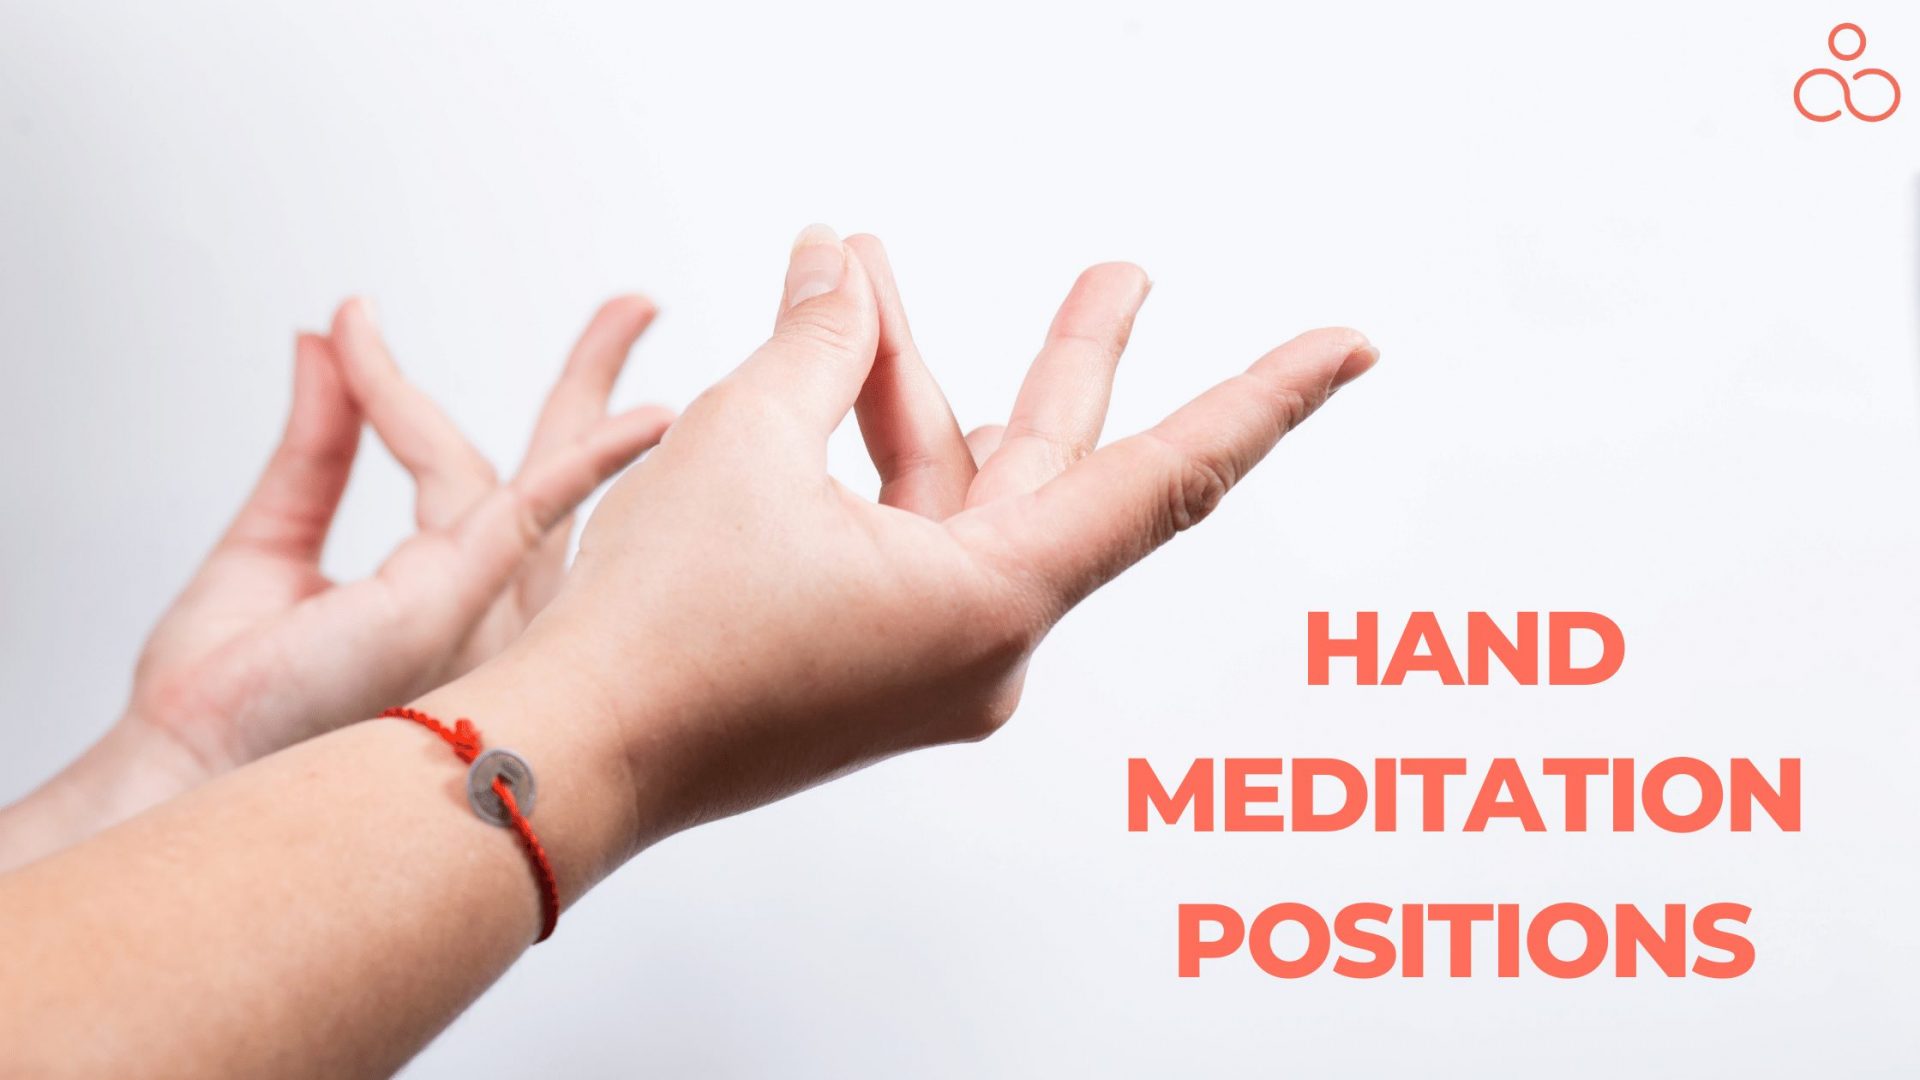 Hand Meditation Positions